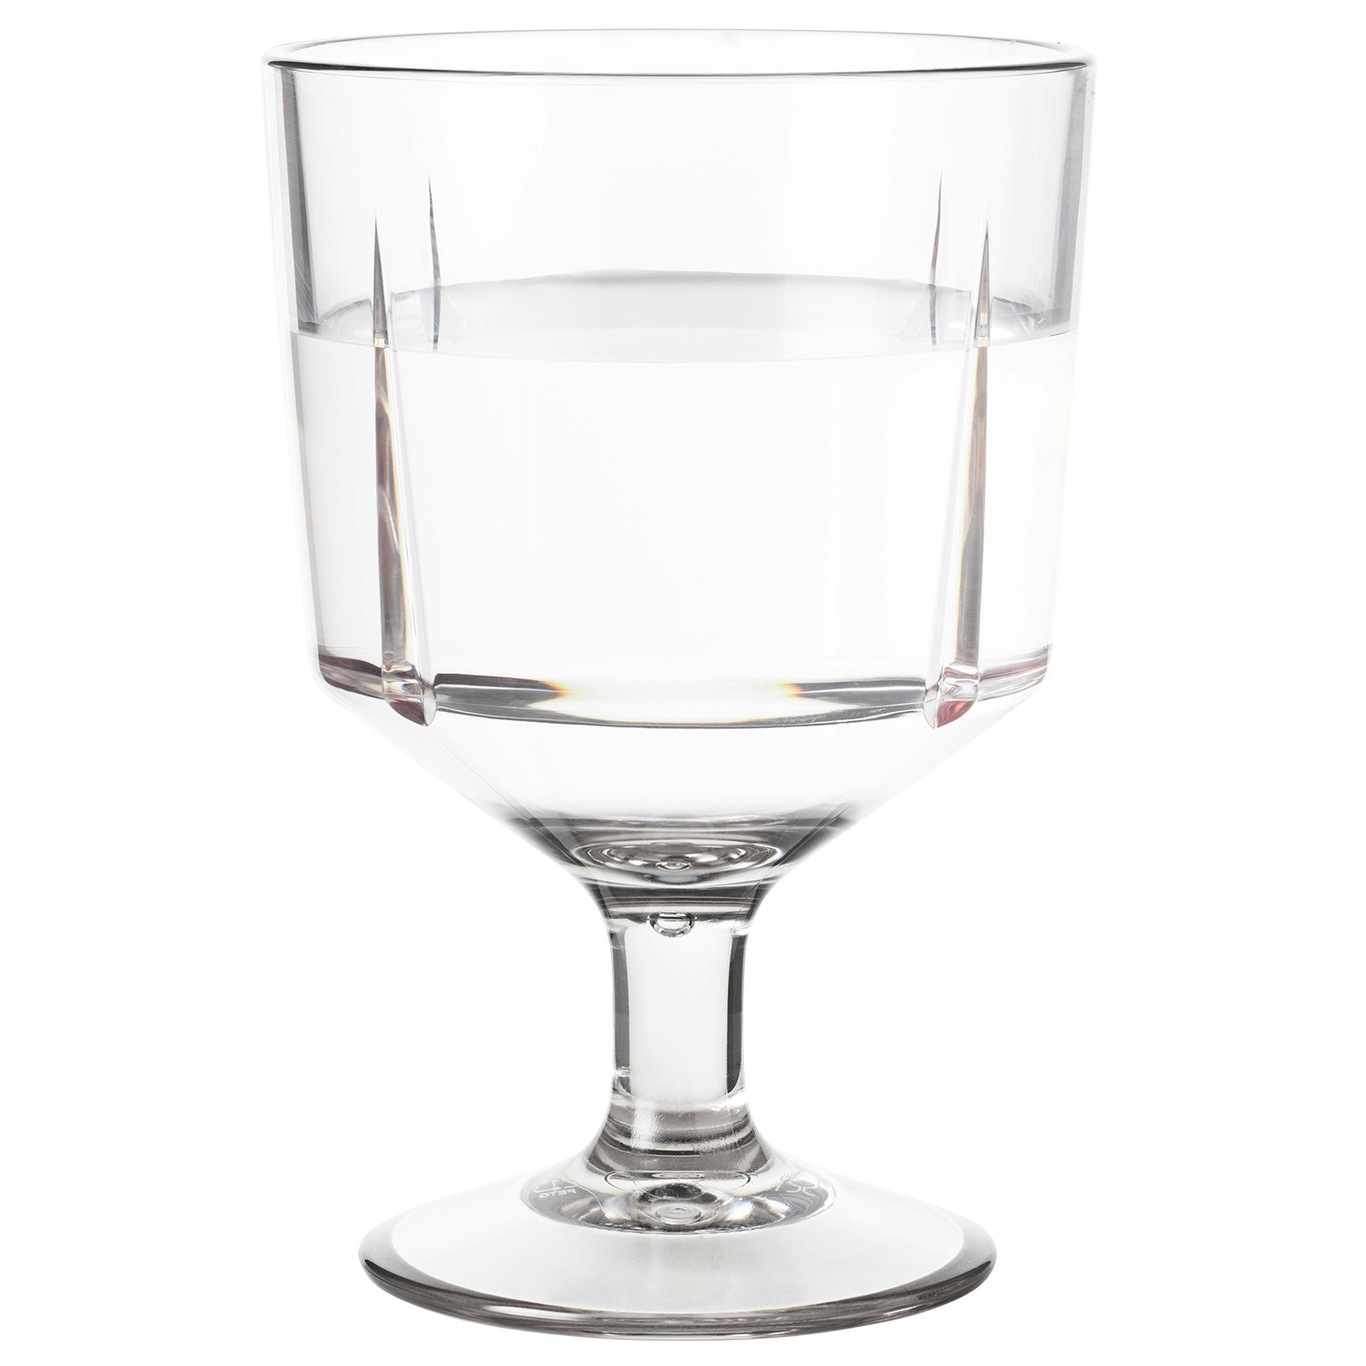 https://royaldesign.com/image/2/rosendahl-copenhagen-gc-outdoor-glas-26-cl-klar-2-st-1?w=800&quality=80